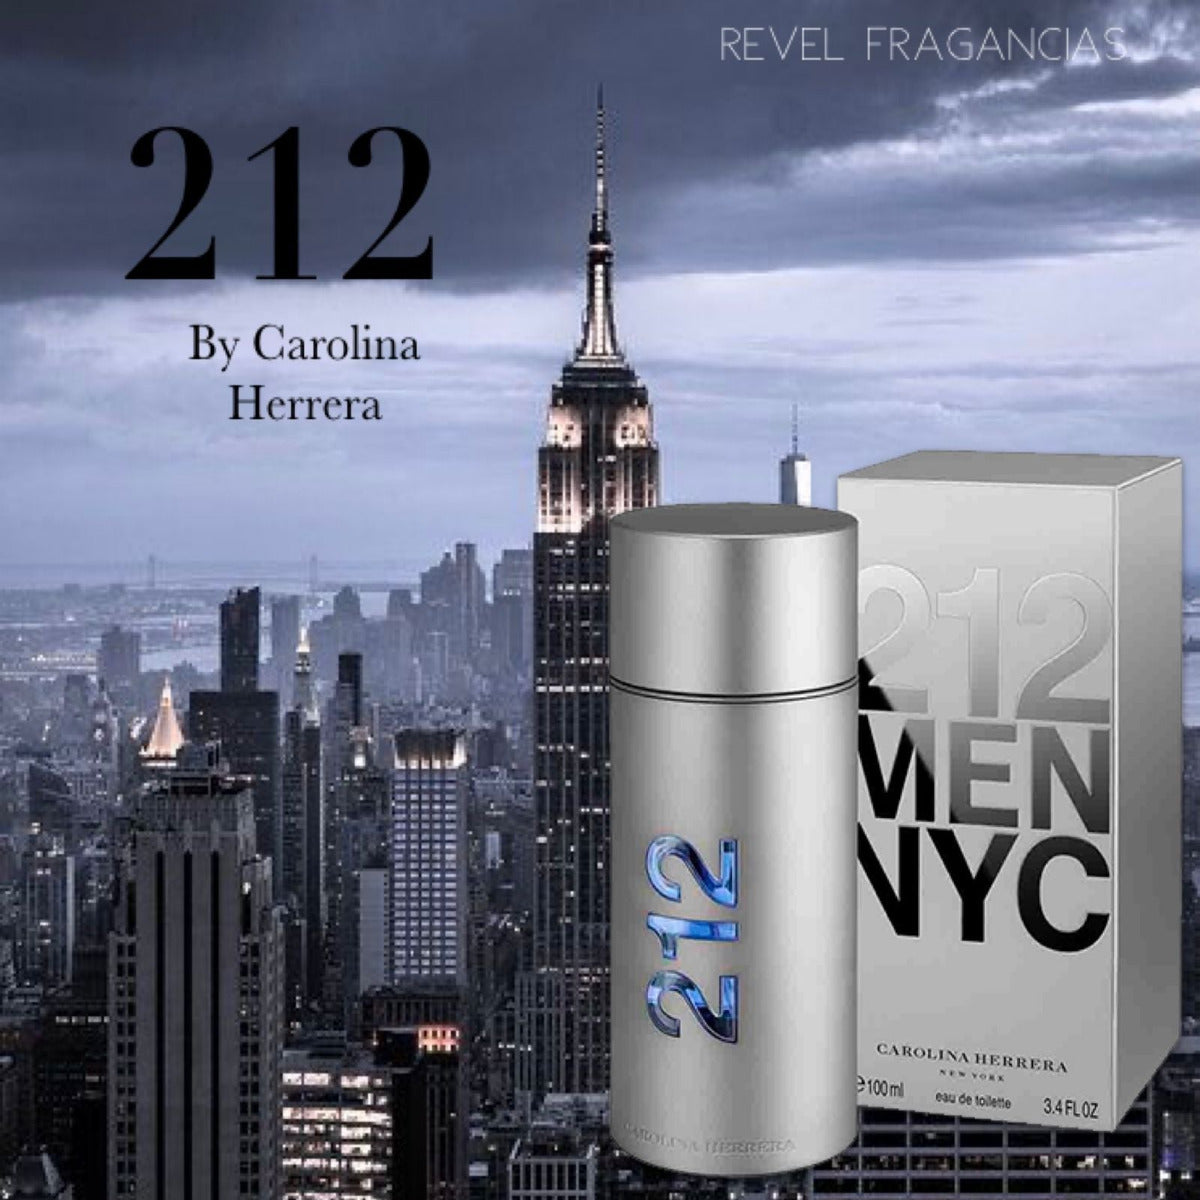 Carolina Herrera 212 Men NYC | Ramfa Beauty